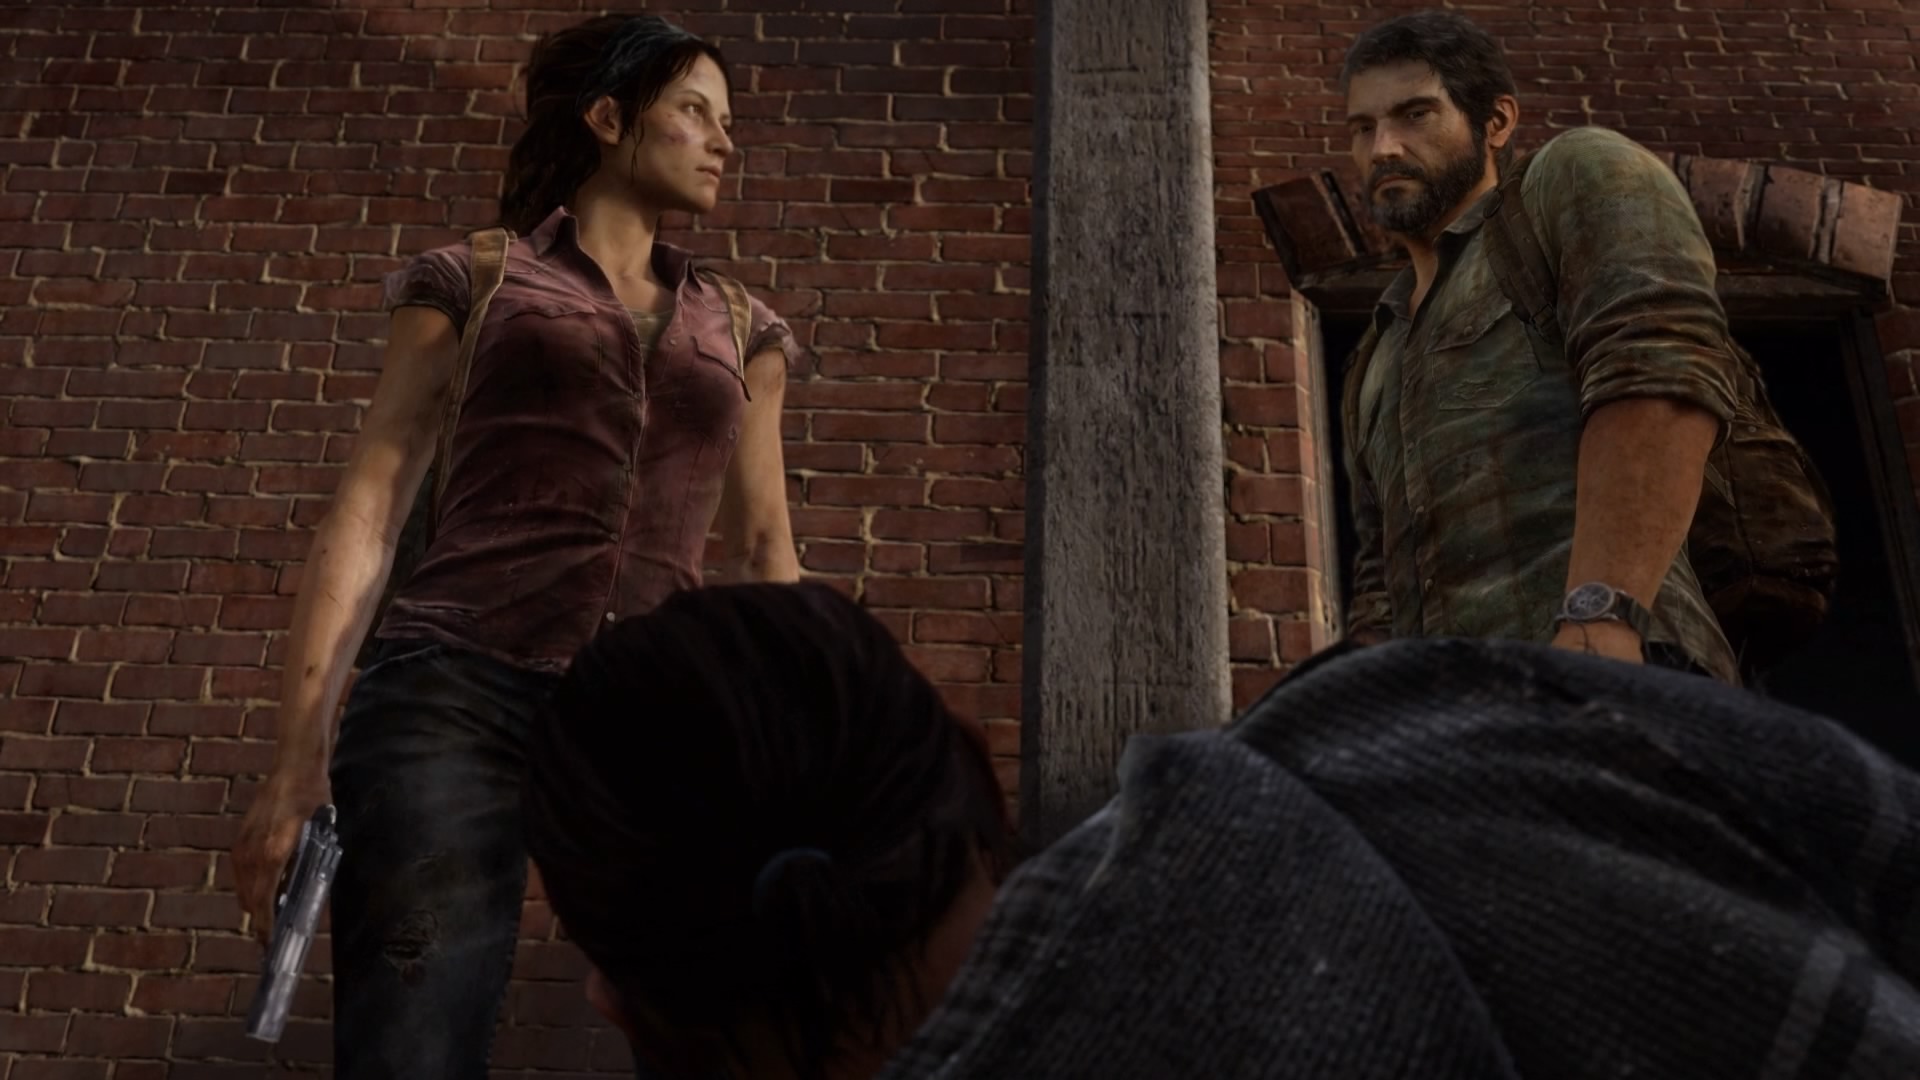 The Last of Us Part 2 originally had us visit Joel's girlfriend